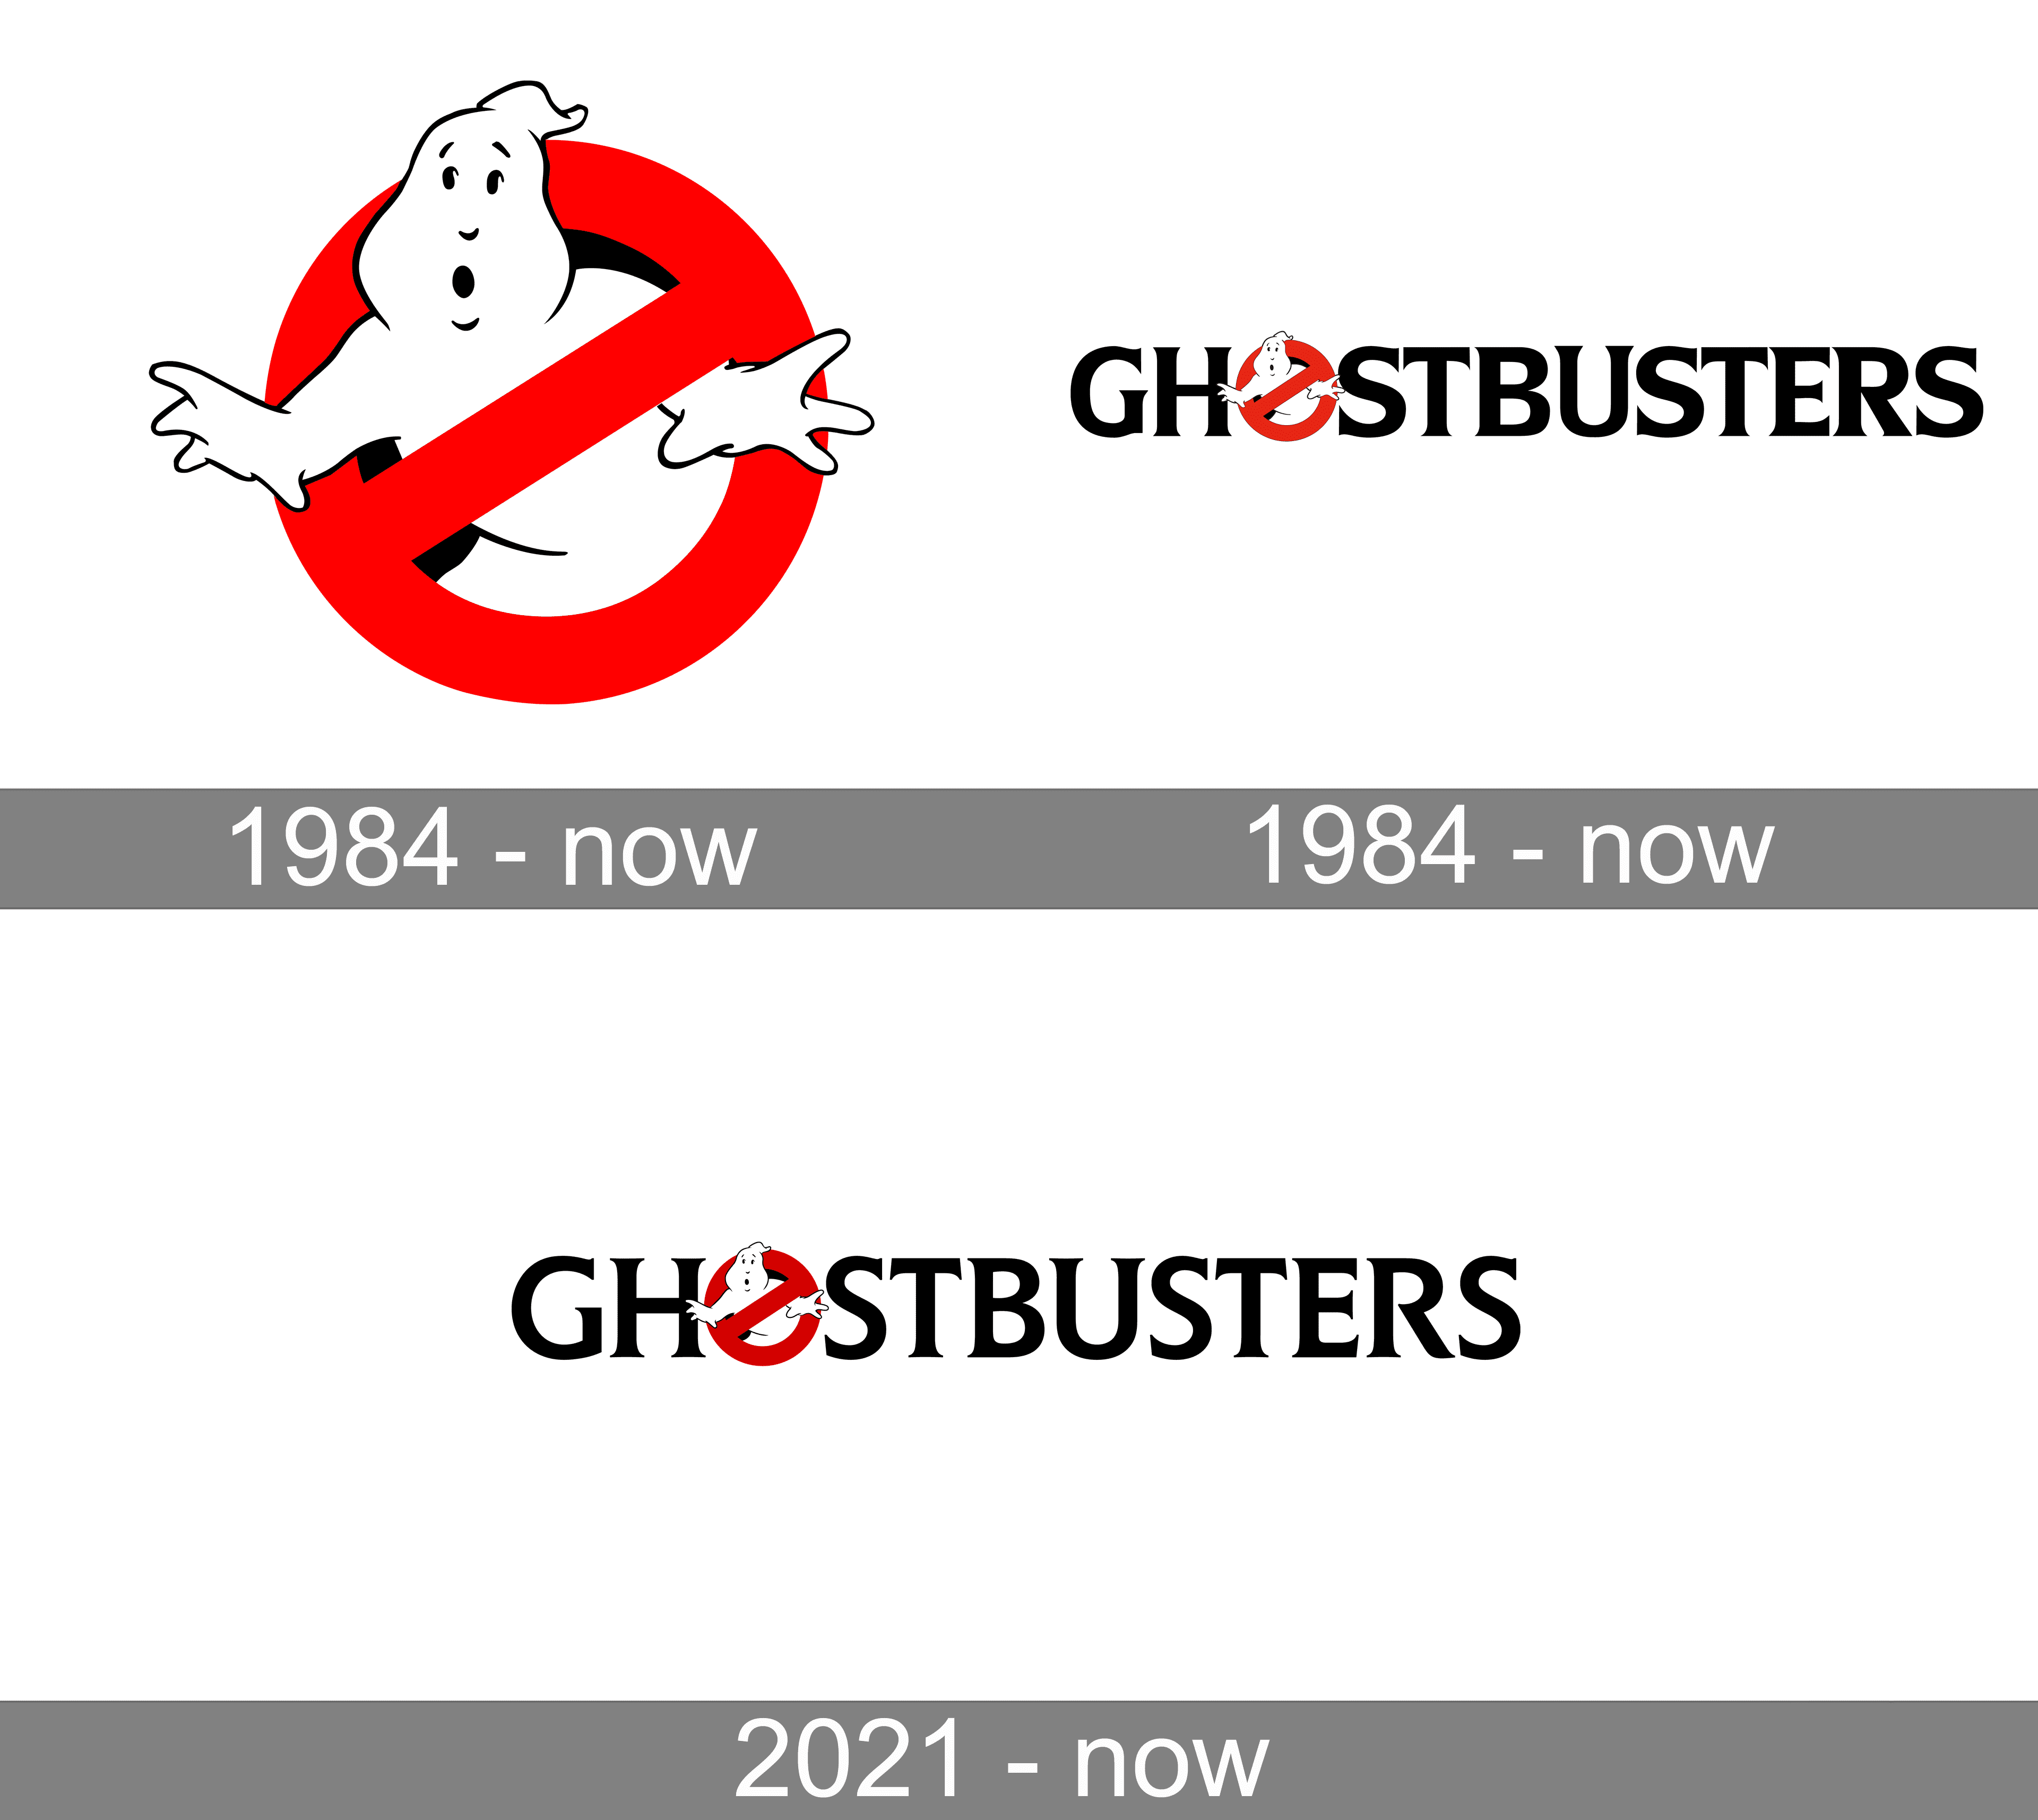 ghostbusters movie logo